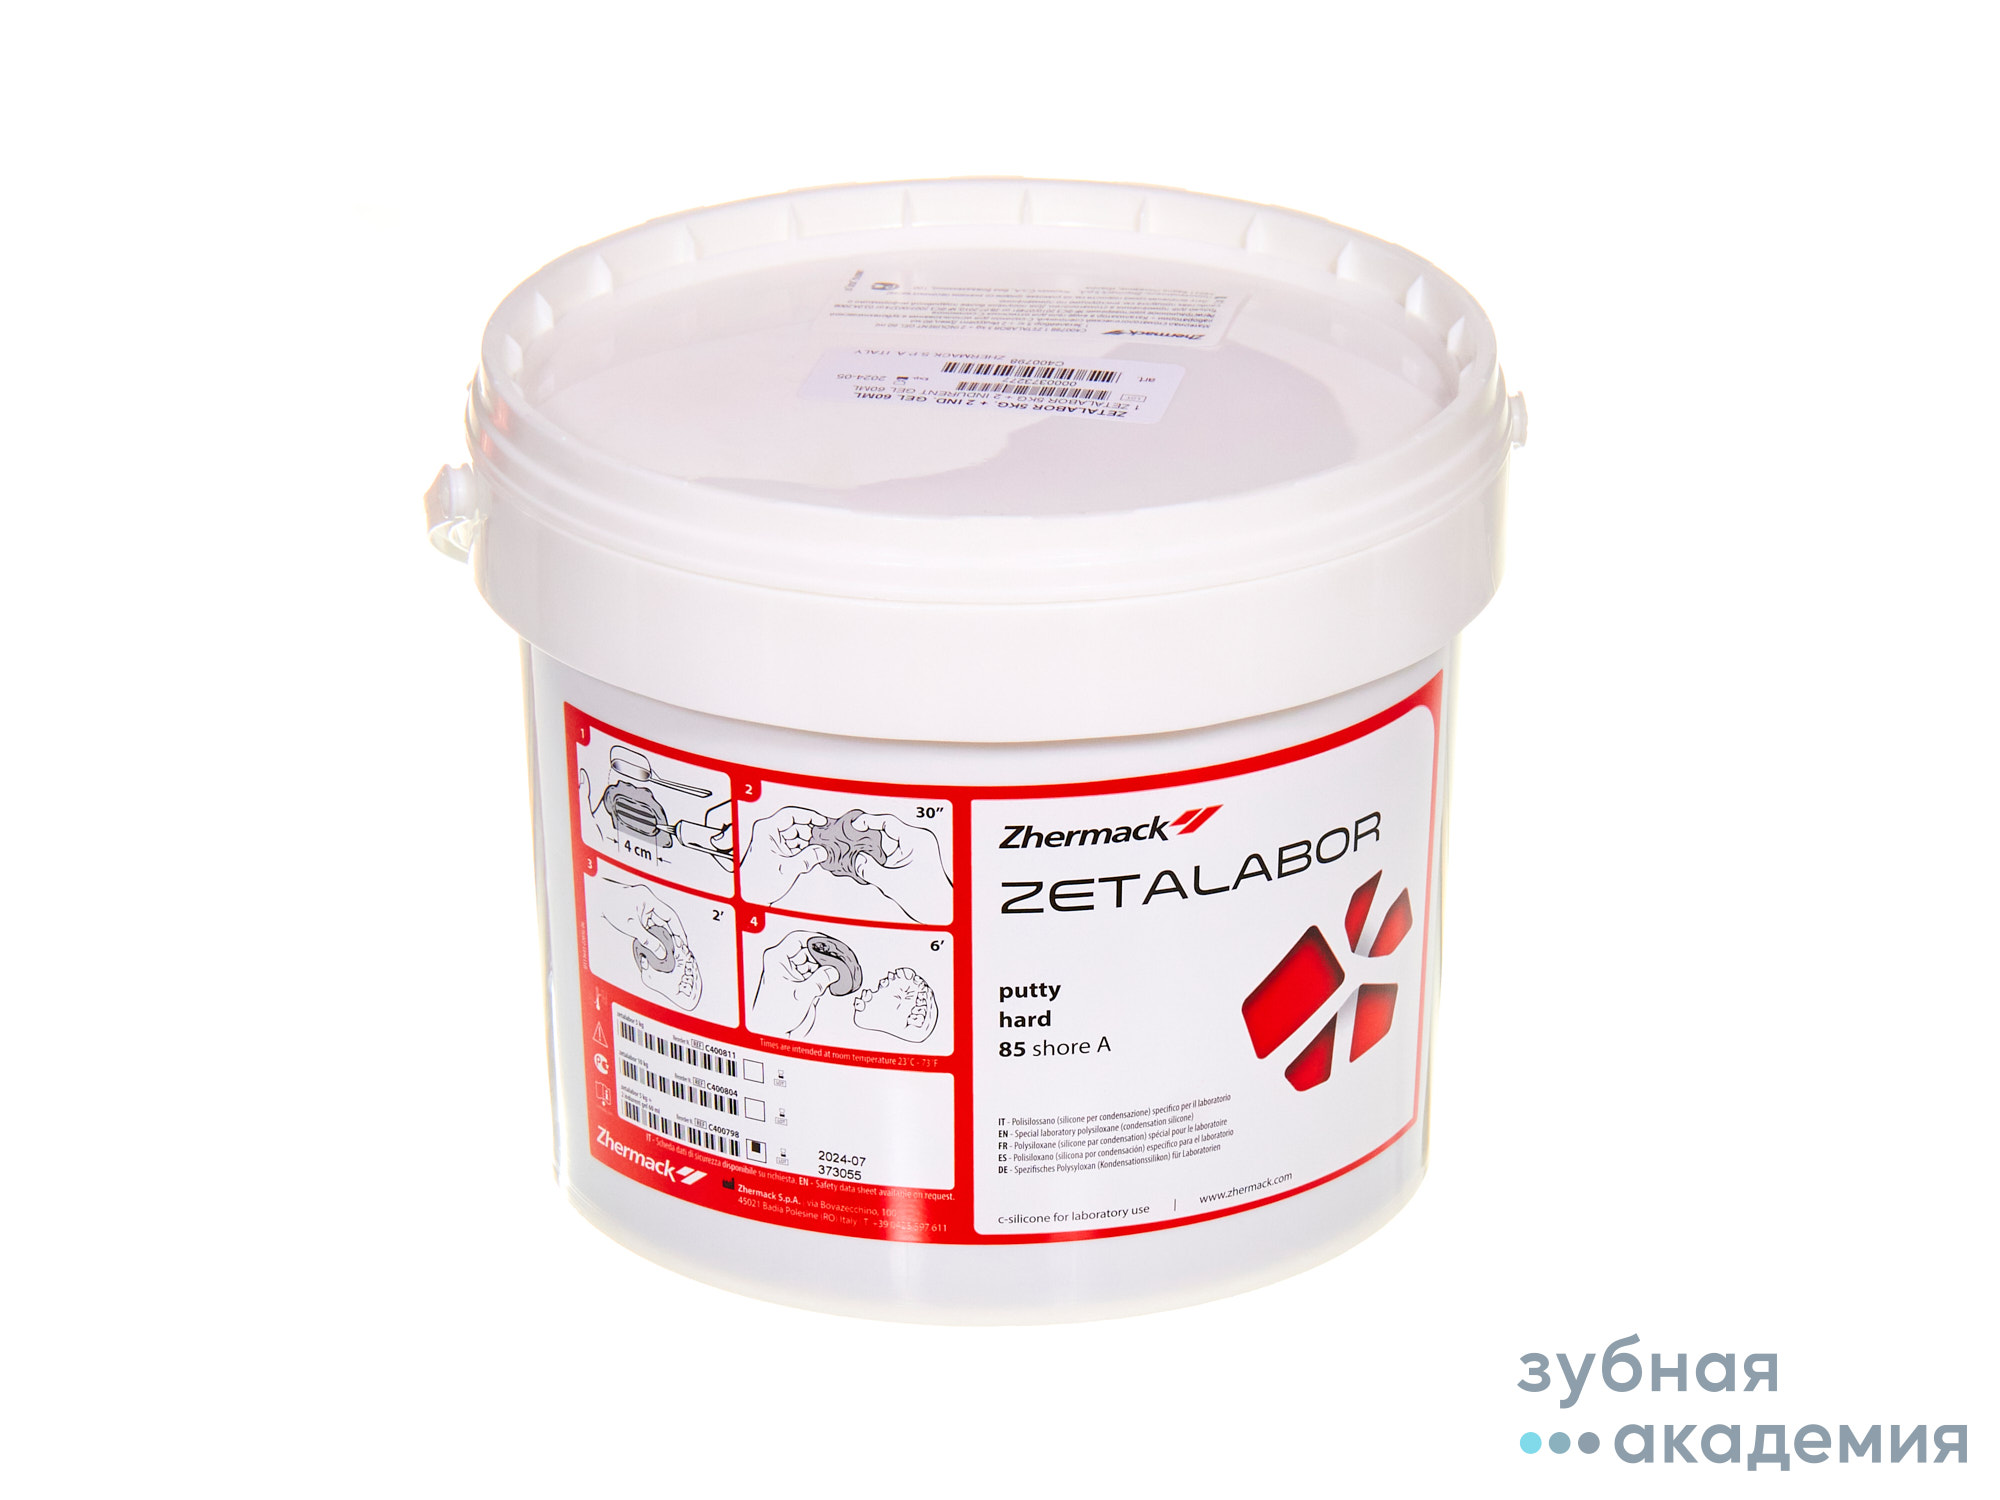 Zetalabor + Indurent gel - С-силикон лаборатор.(5кг+2х60г.катализатор), Zhermack/ Италия